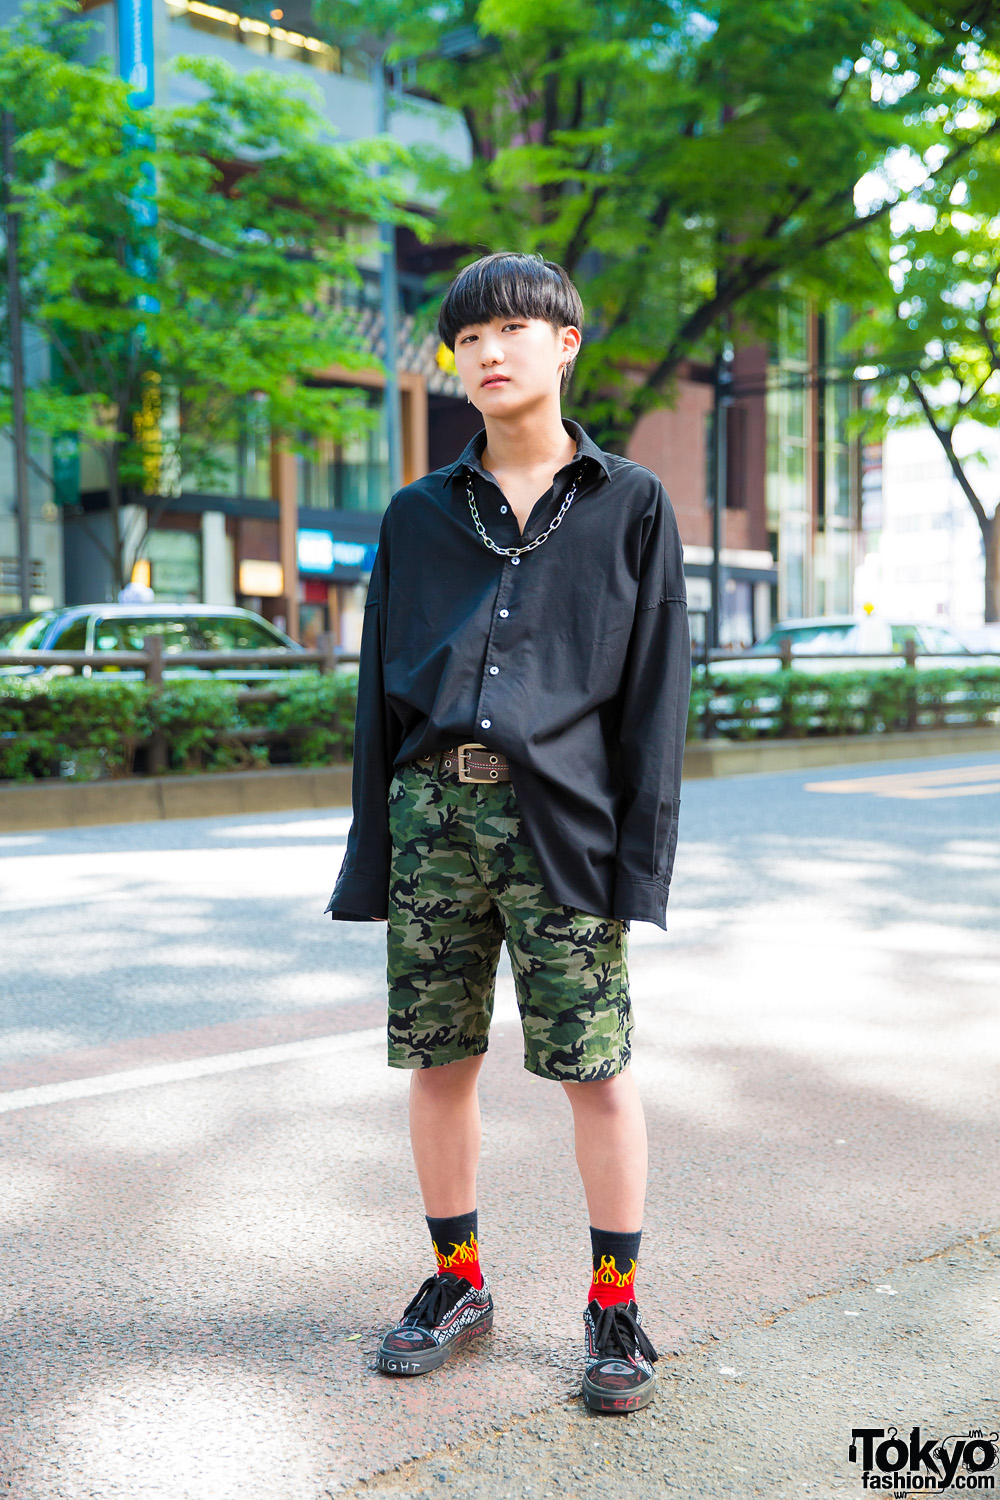 Harajuku Guy in Camouflage Print Shorts, Flame Socks & Vans Sneakers